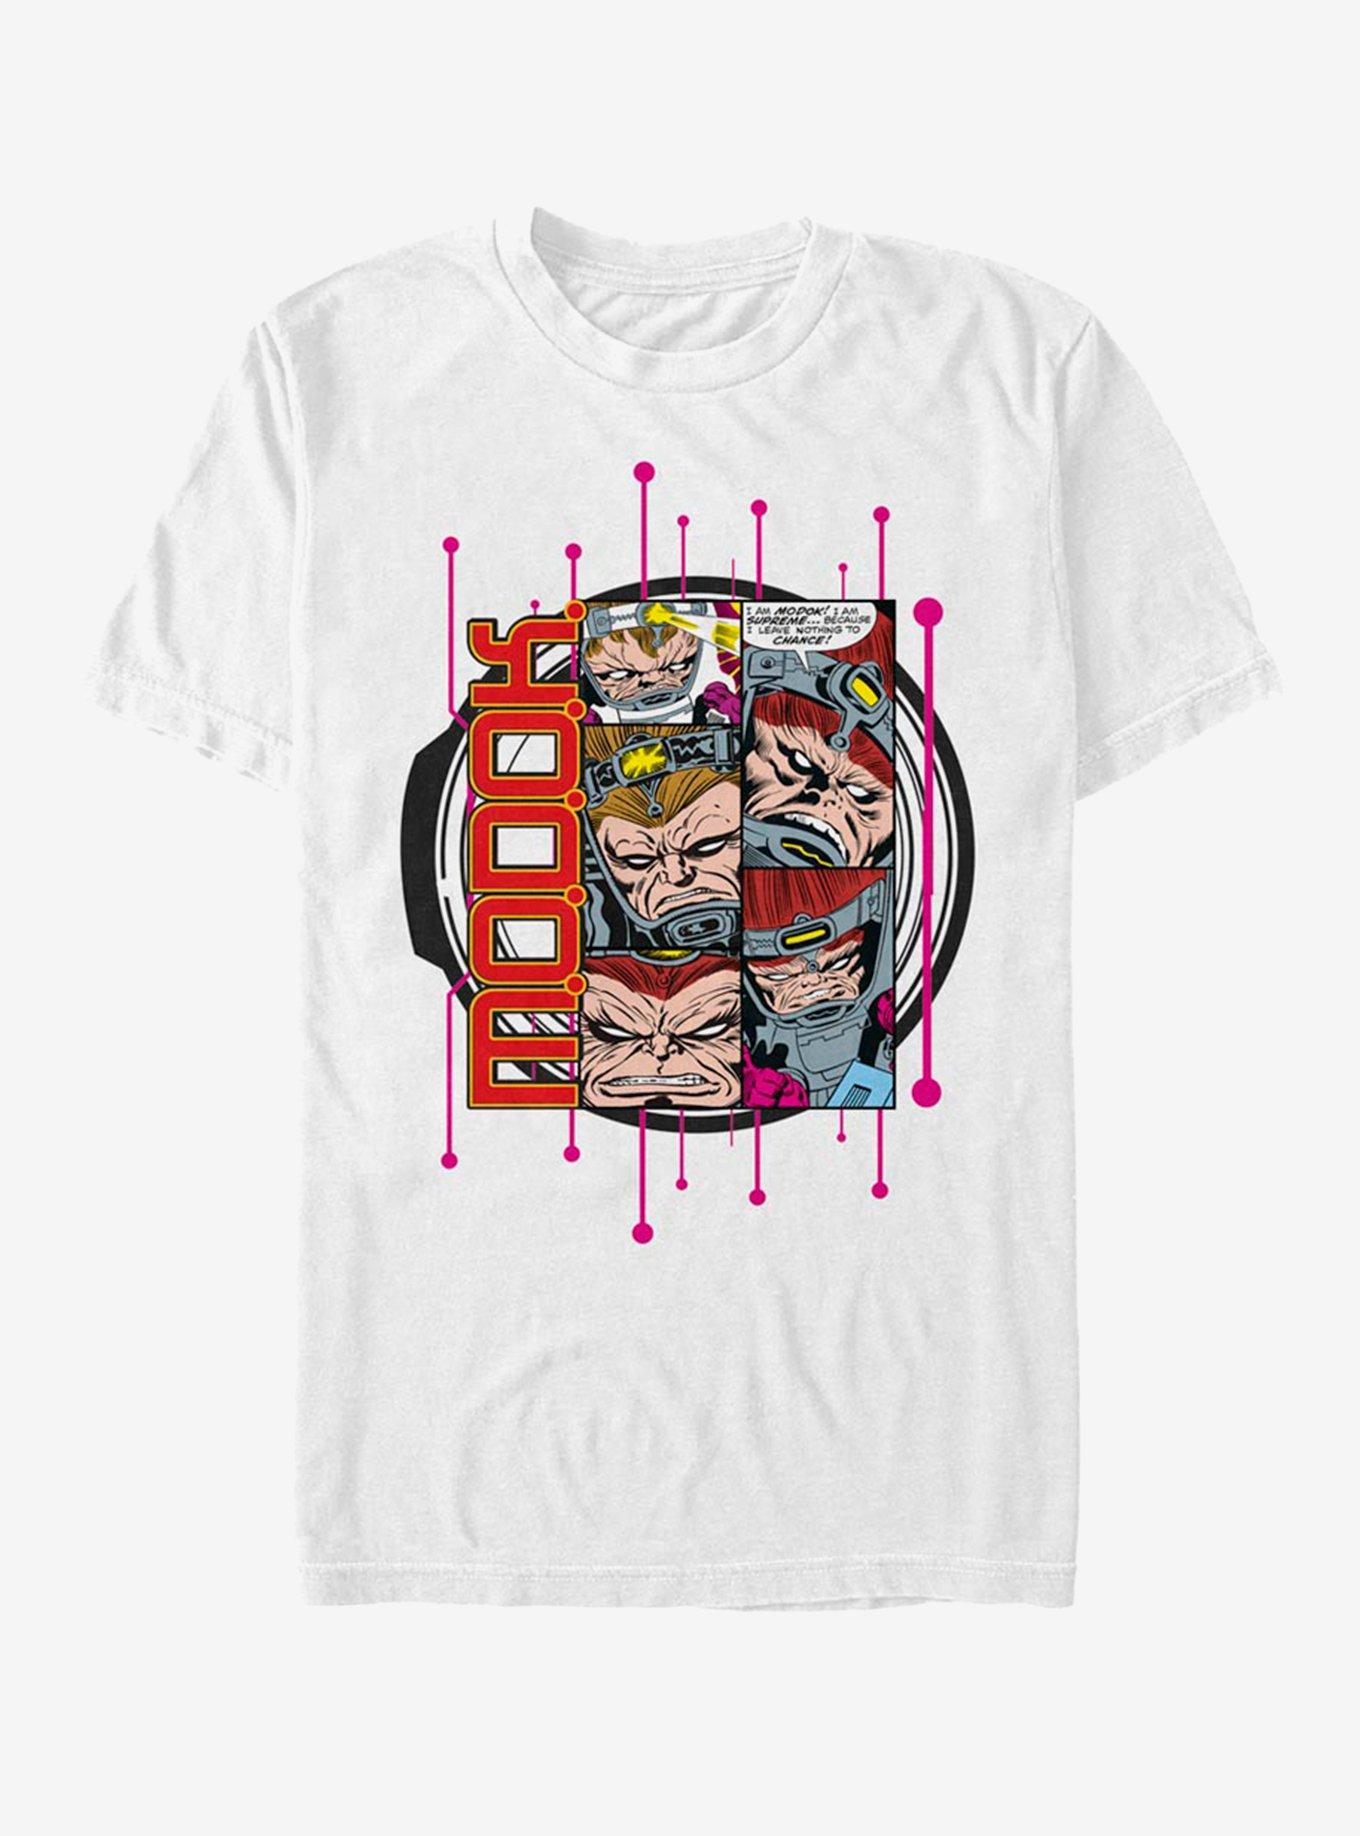 Marvel MODOK Collage T-Shirt, WHITE, hi-res